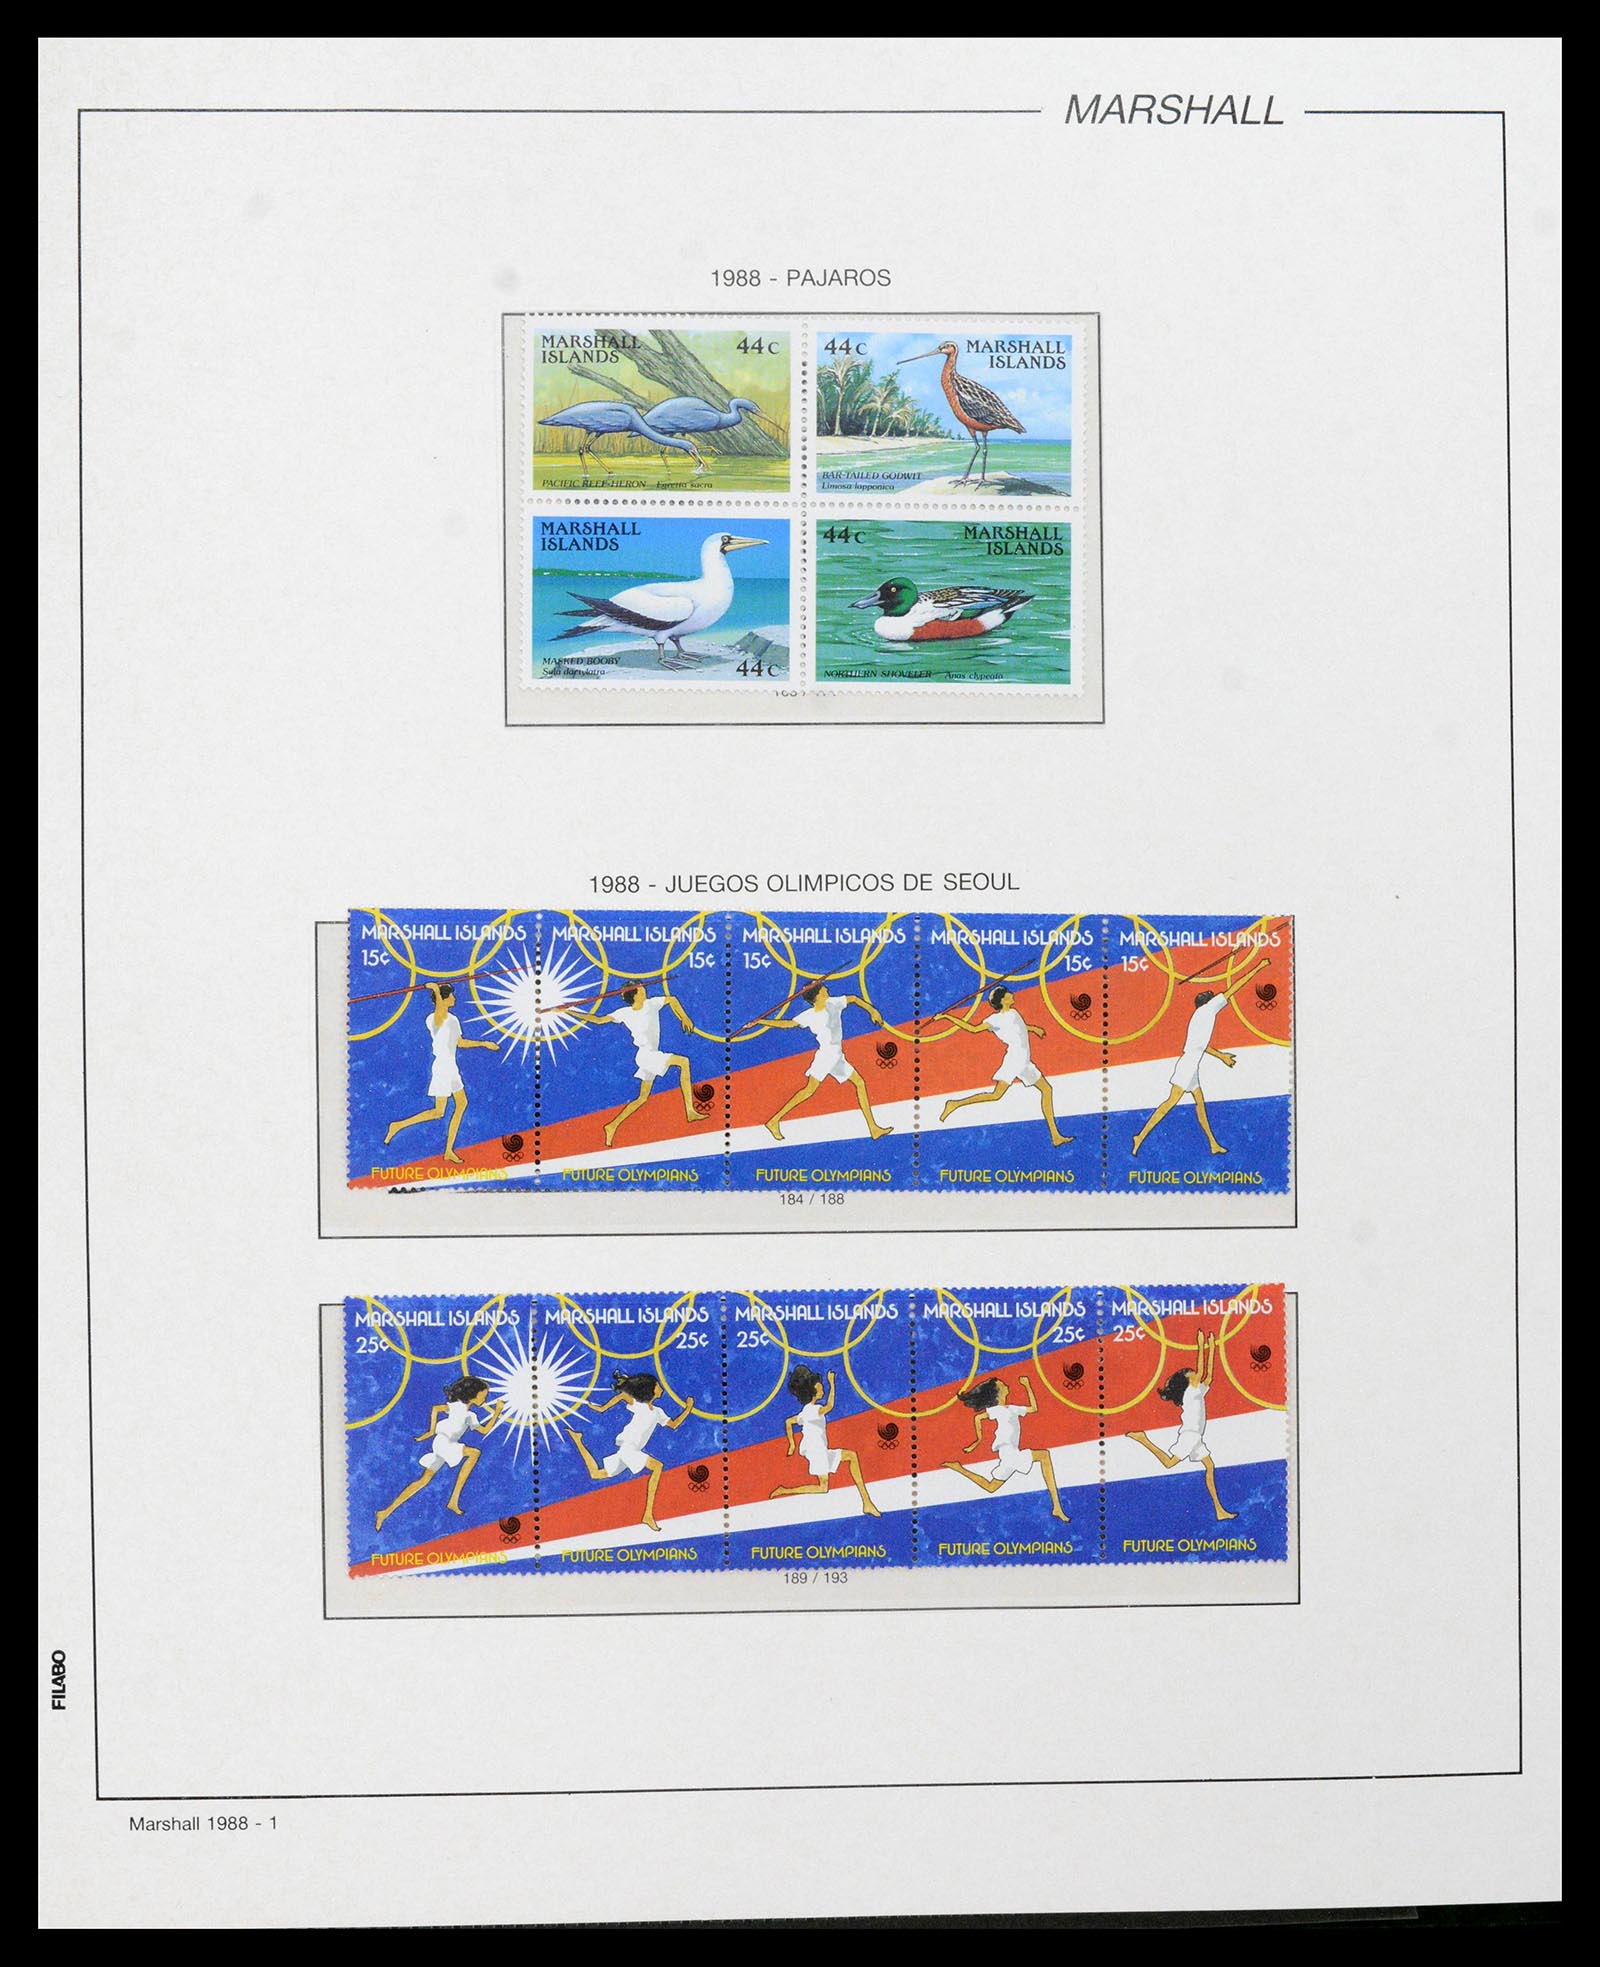 39222 0128 - Stamp collection 39222 Palau, Micronesia and Marshall islands 1980-1995.